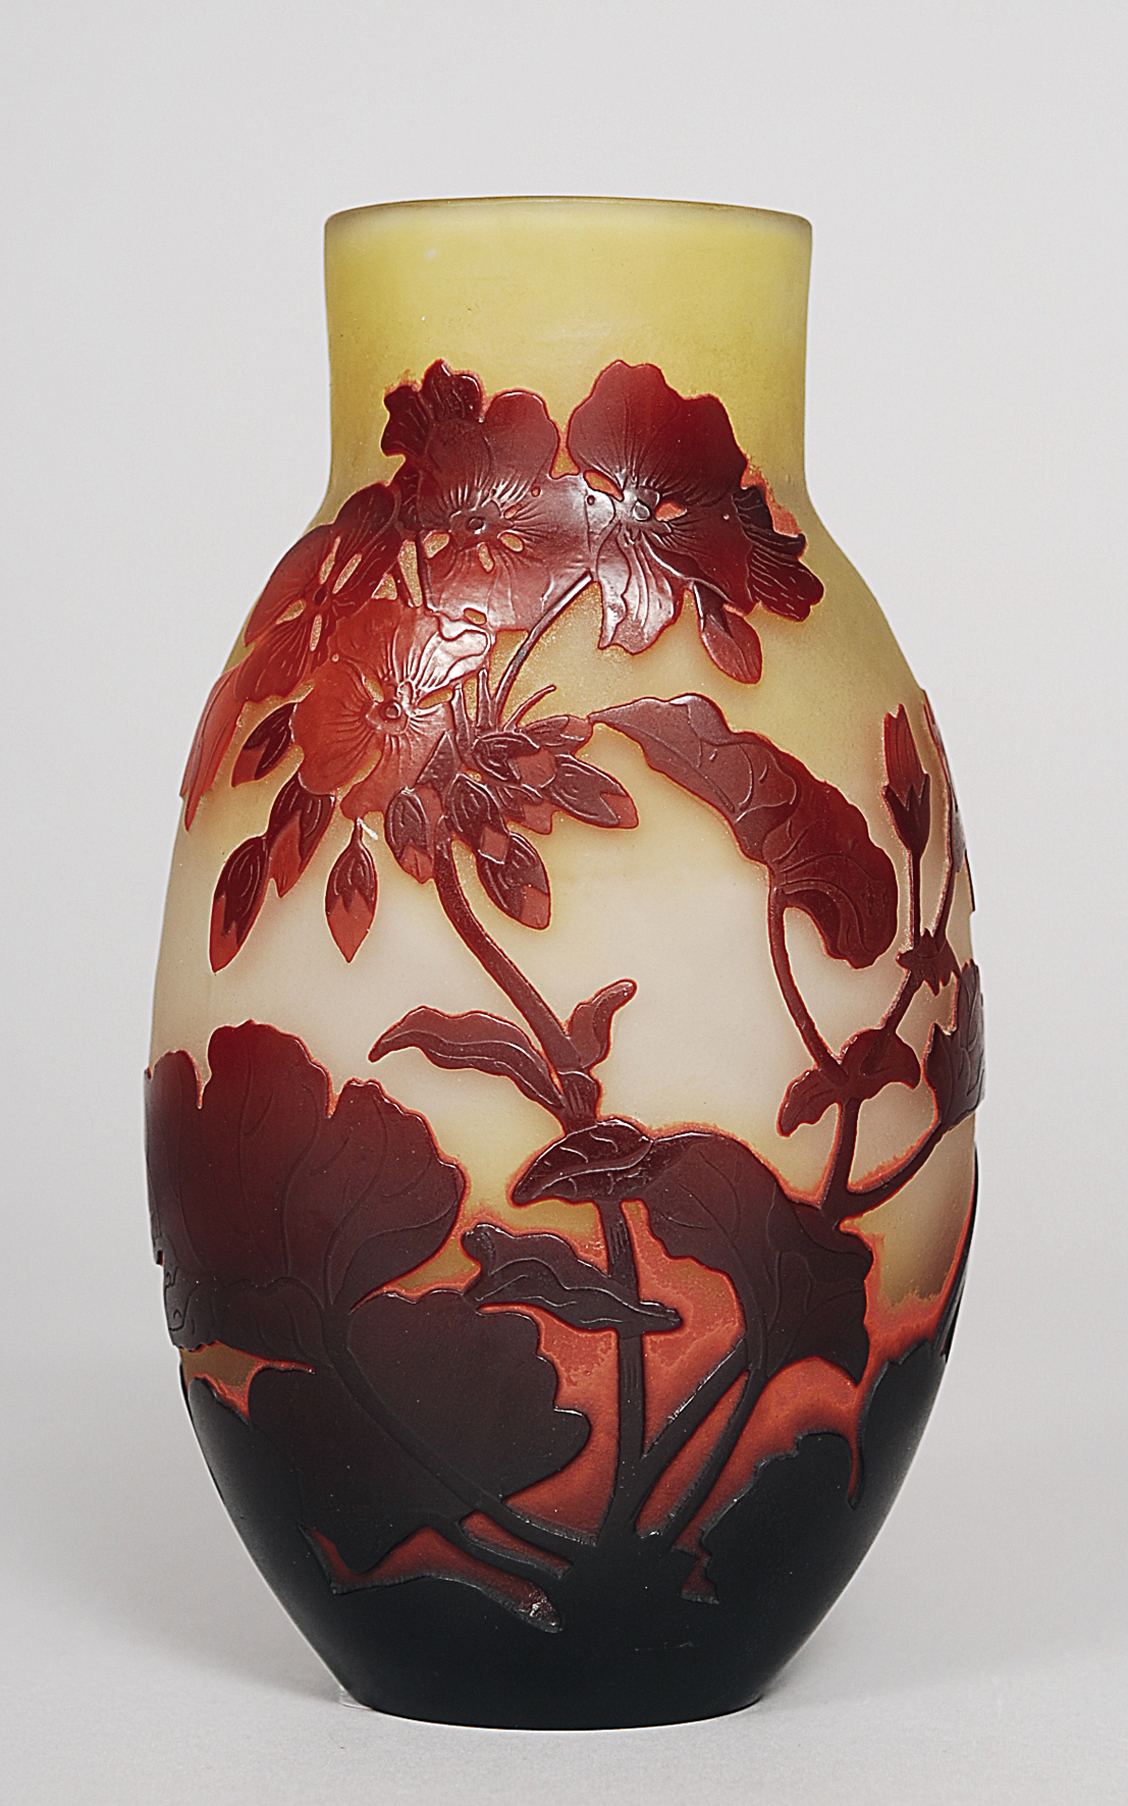 A small Art Nouveau vase with hydrangea